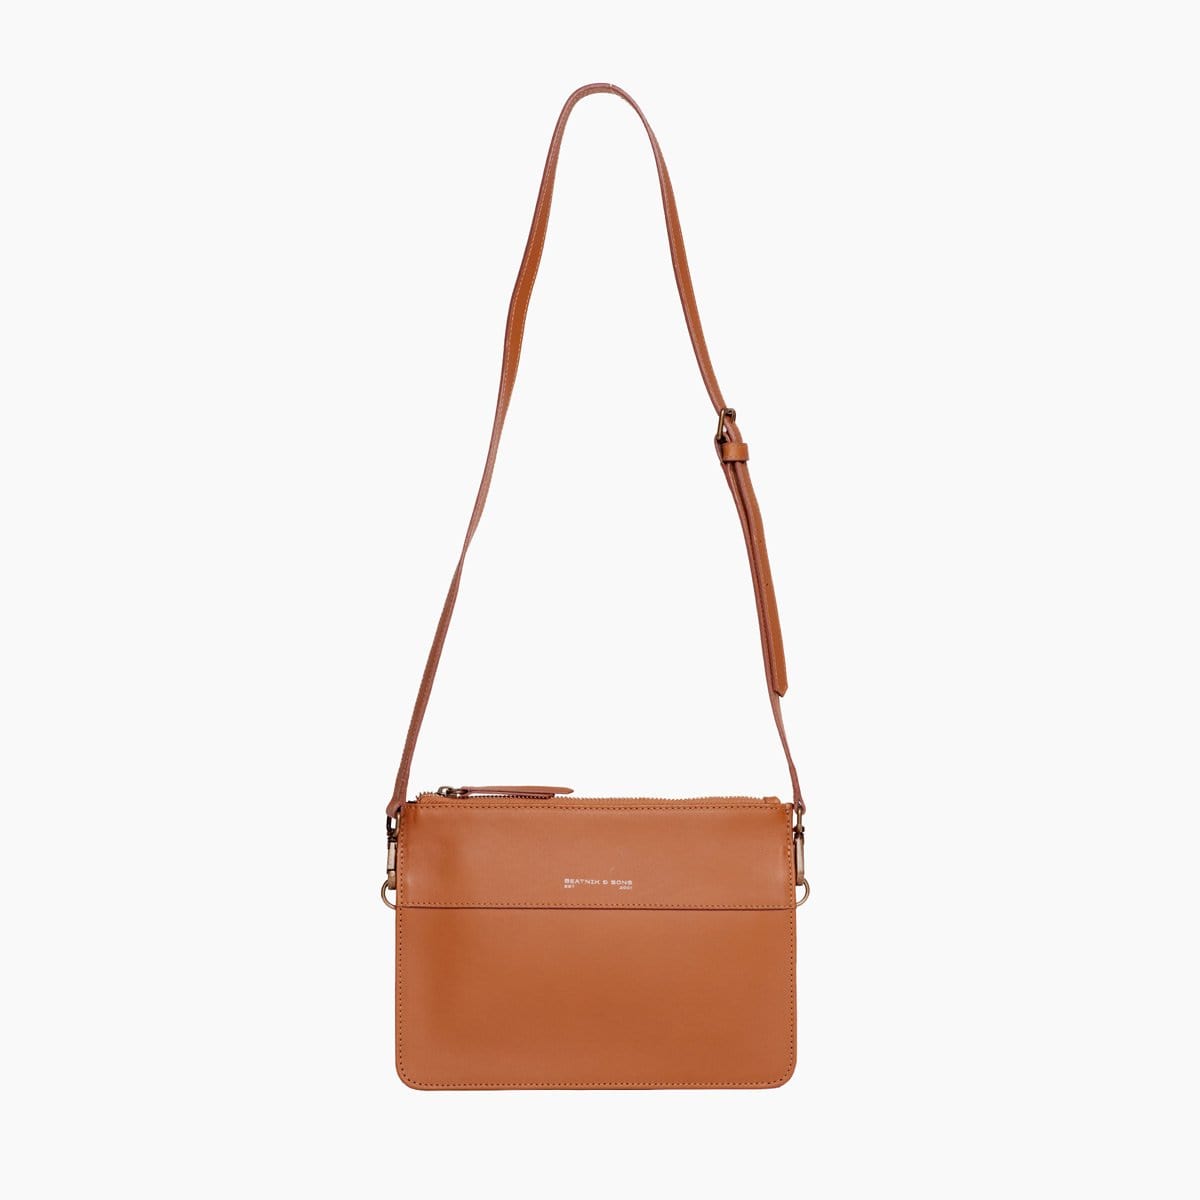 Beatnik & Sons Leather handbags the Terry flat bag